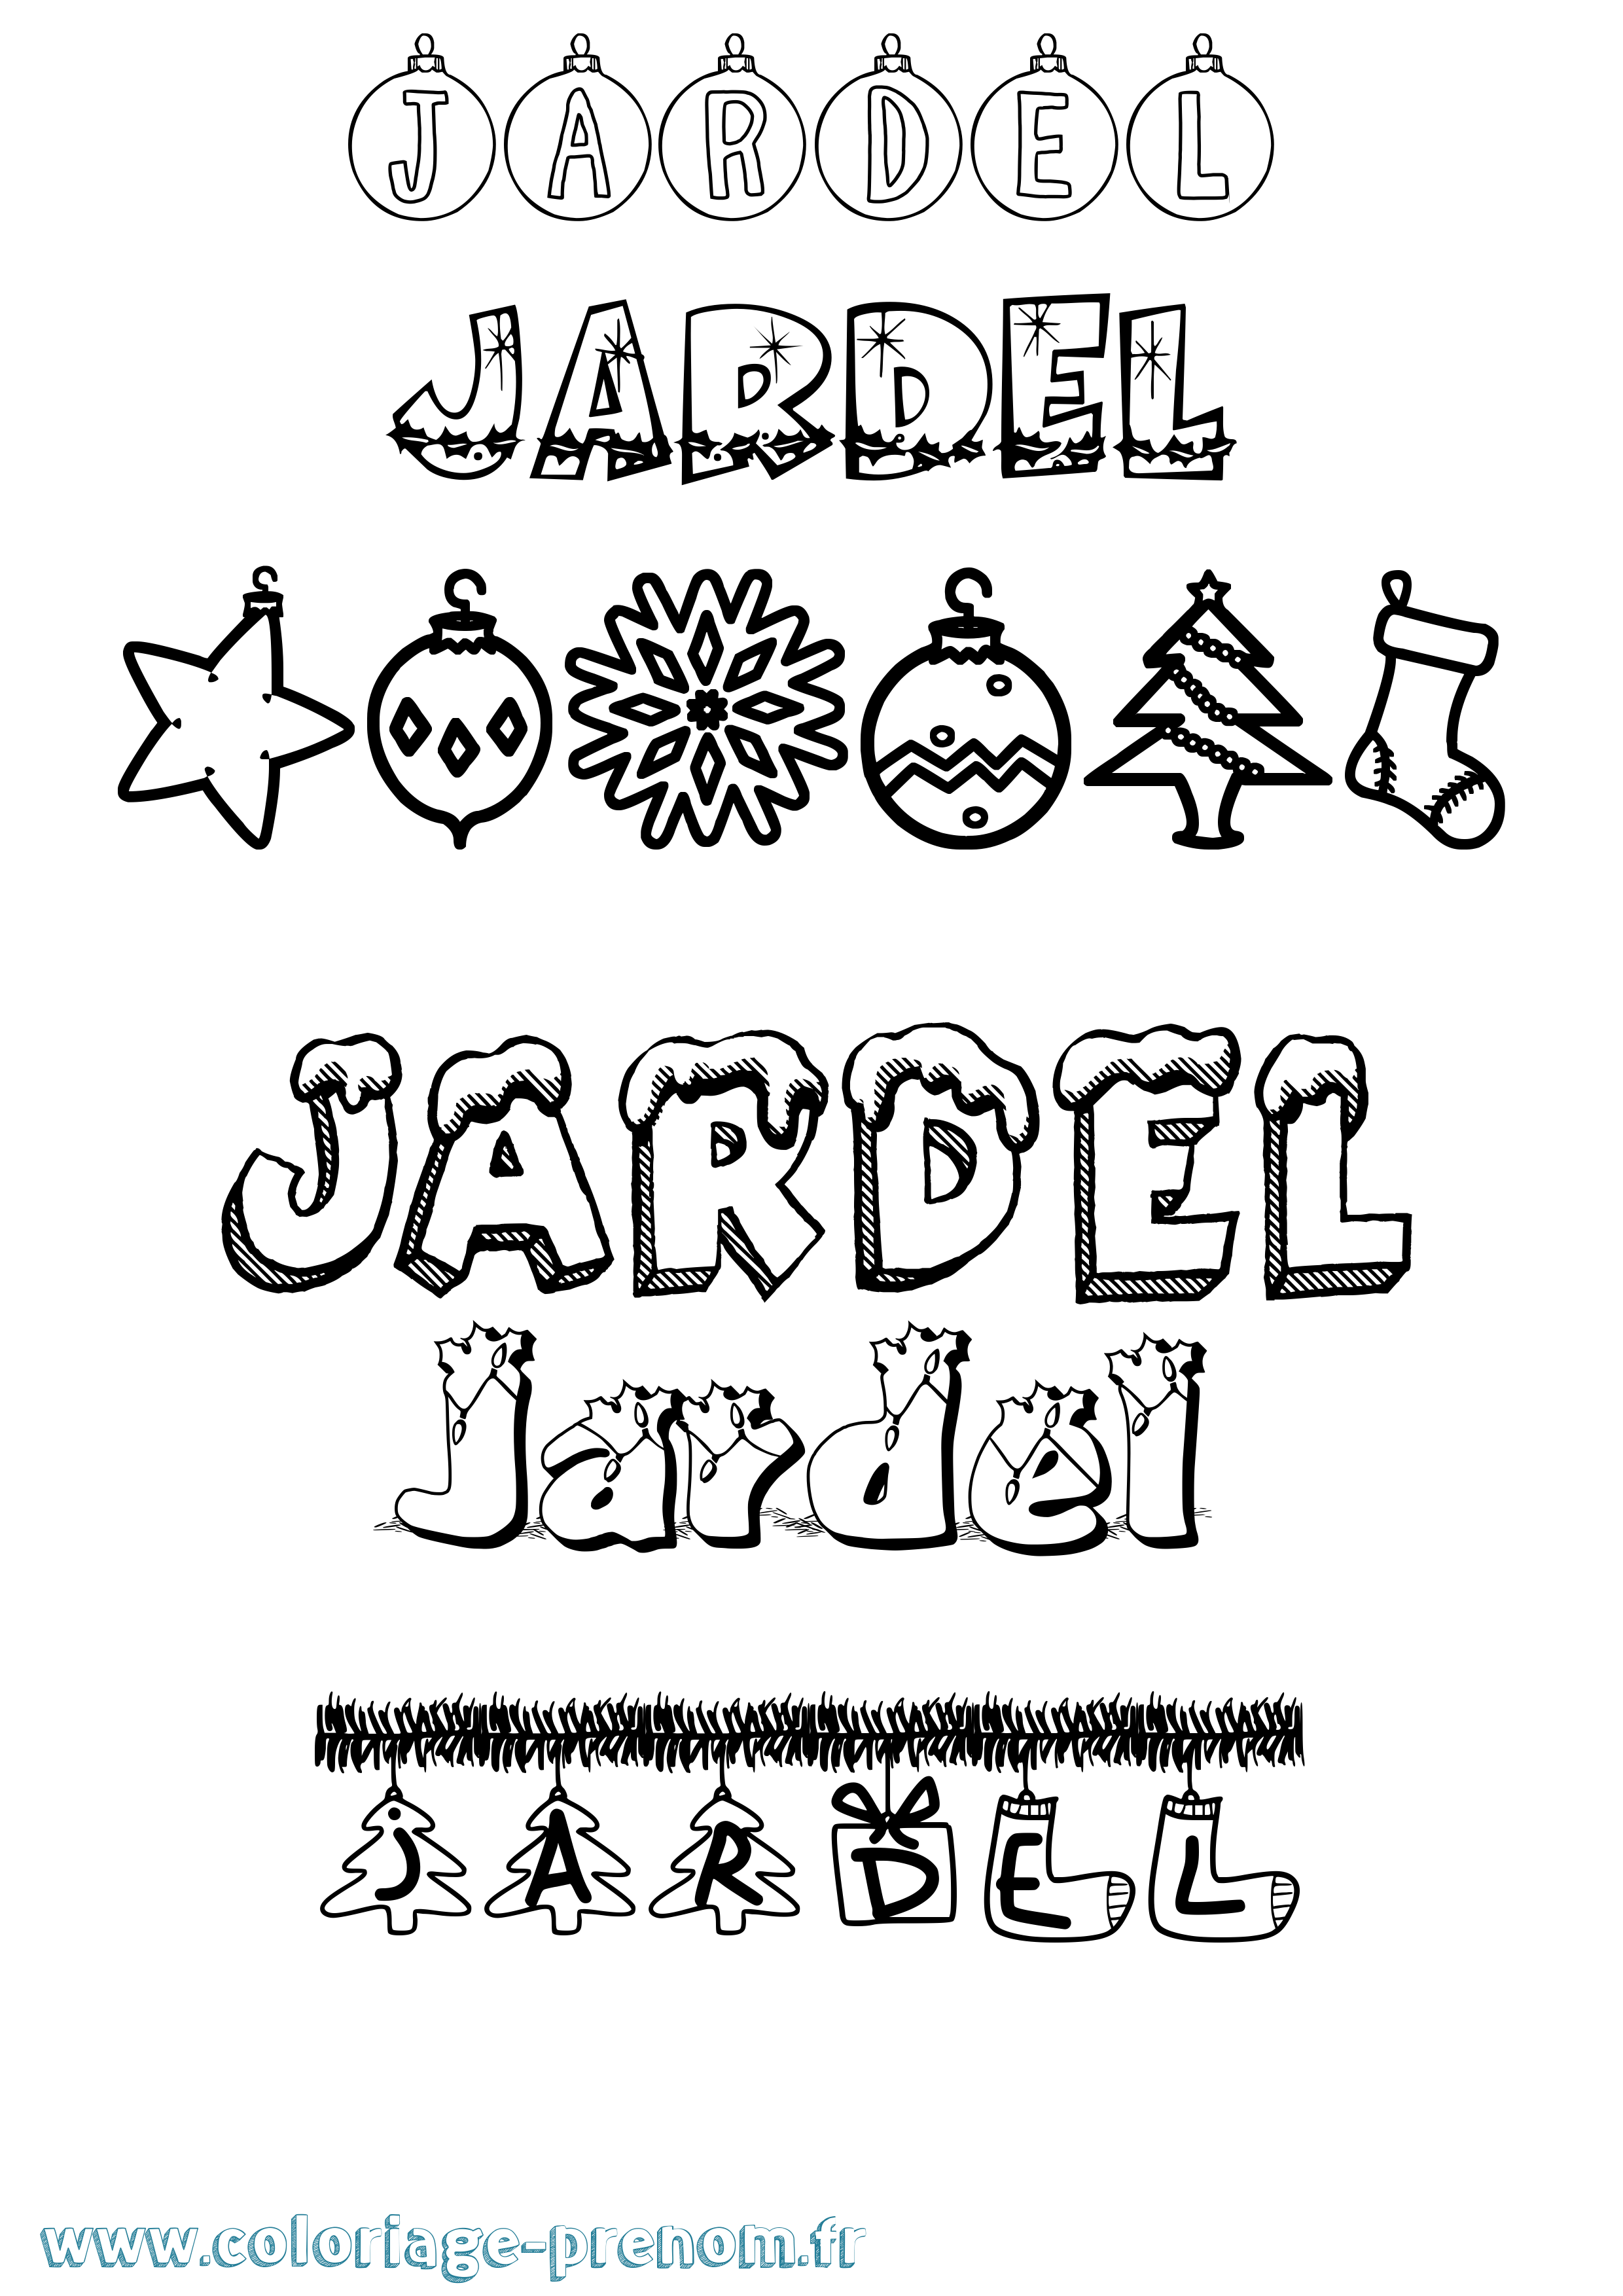 Coloriage prénom Jardel Noël